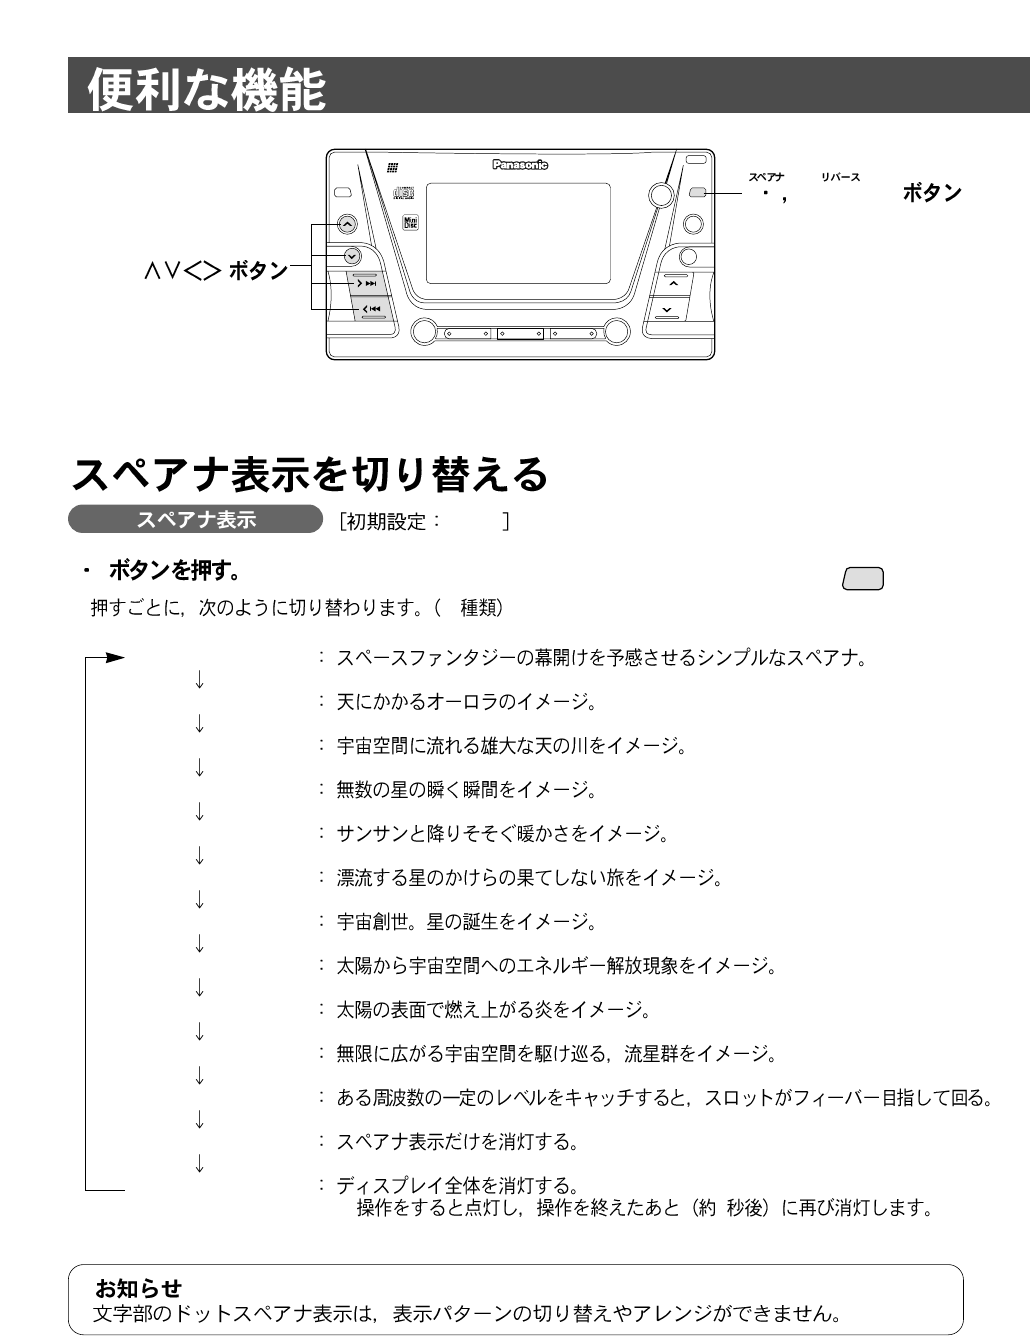 Panasonic Cq Vx3300d User Manual To The E04ff5ba 0fd3 4adc B4cb Dde66ce